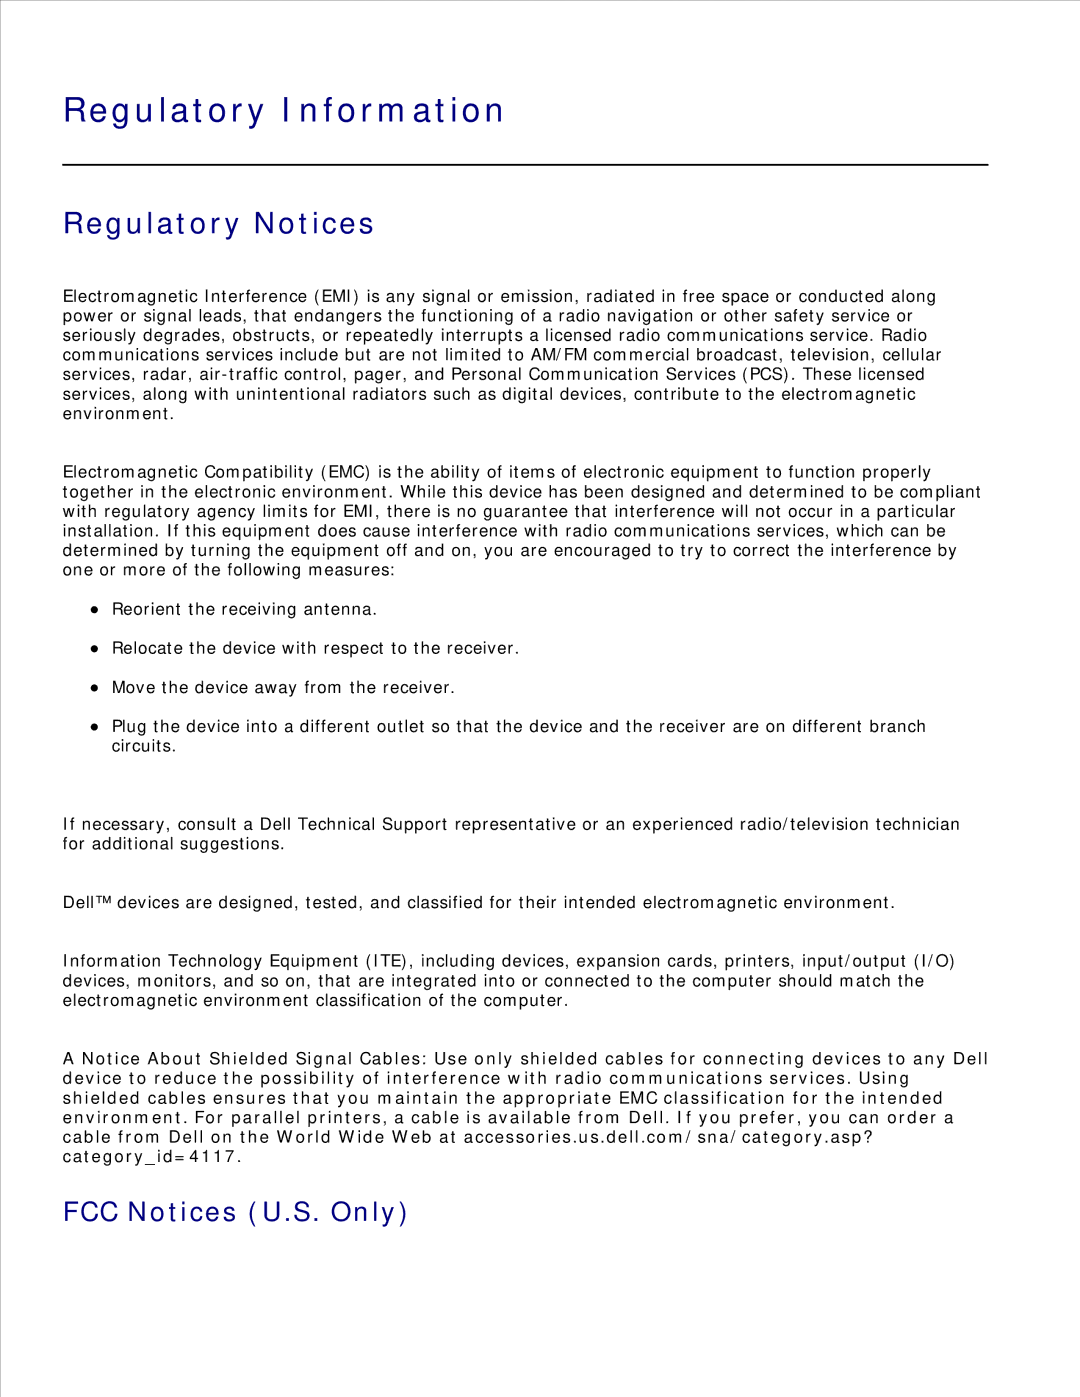 Dell 942 manual Regulatory Information, Regulatory Notices, FCC Notices U.S. Only 